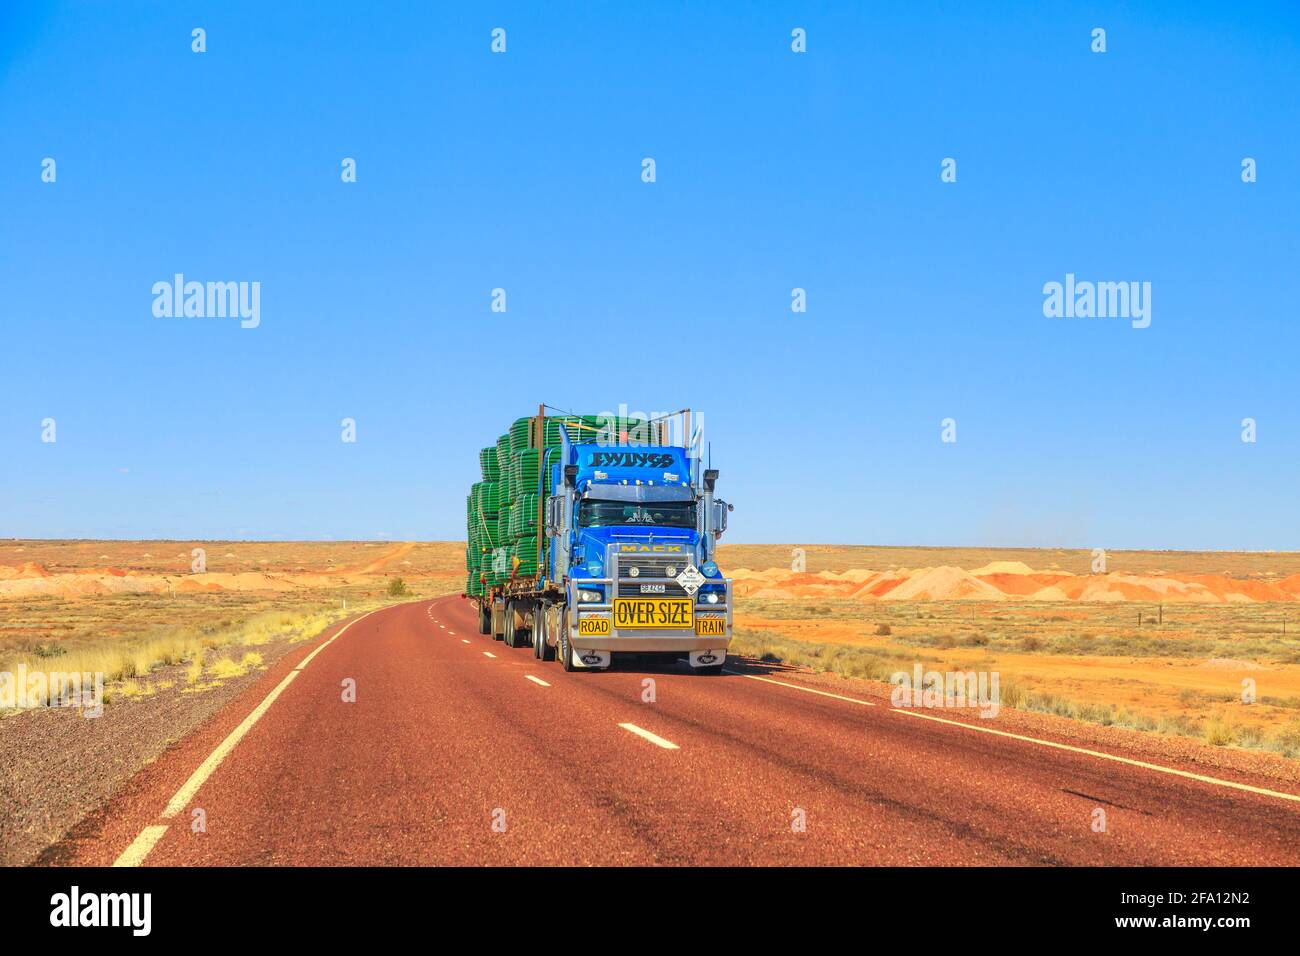 Northern Territory, Australia - August 27, 2019: Ewings Mack road-train truck crossing the highways of the Northern Territory of Australian Outback. Stock Photo